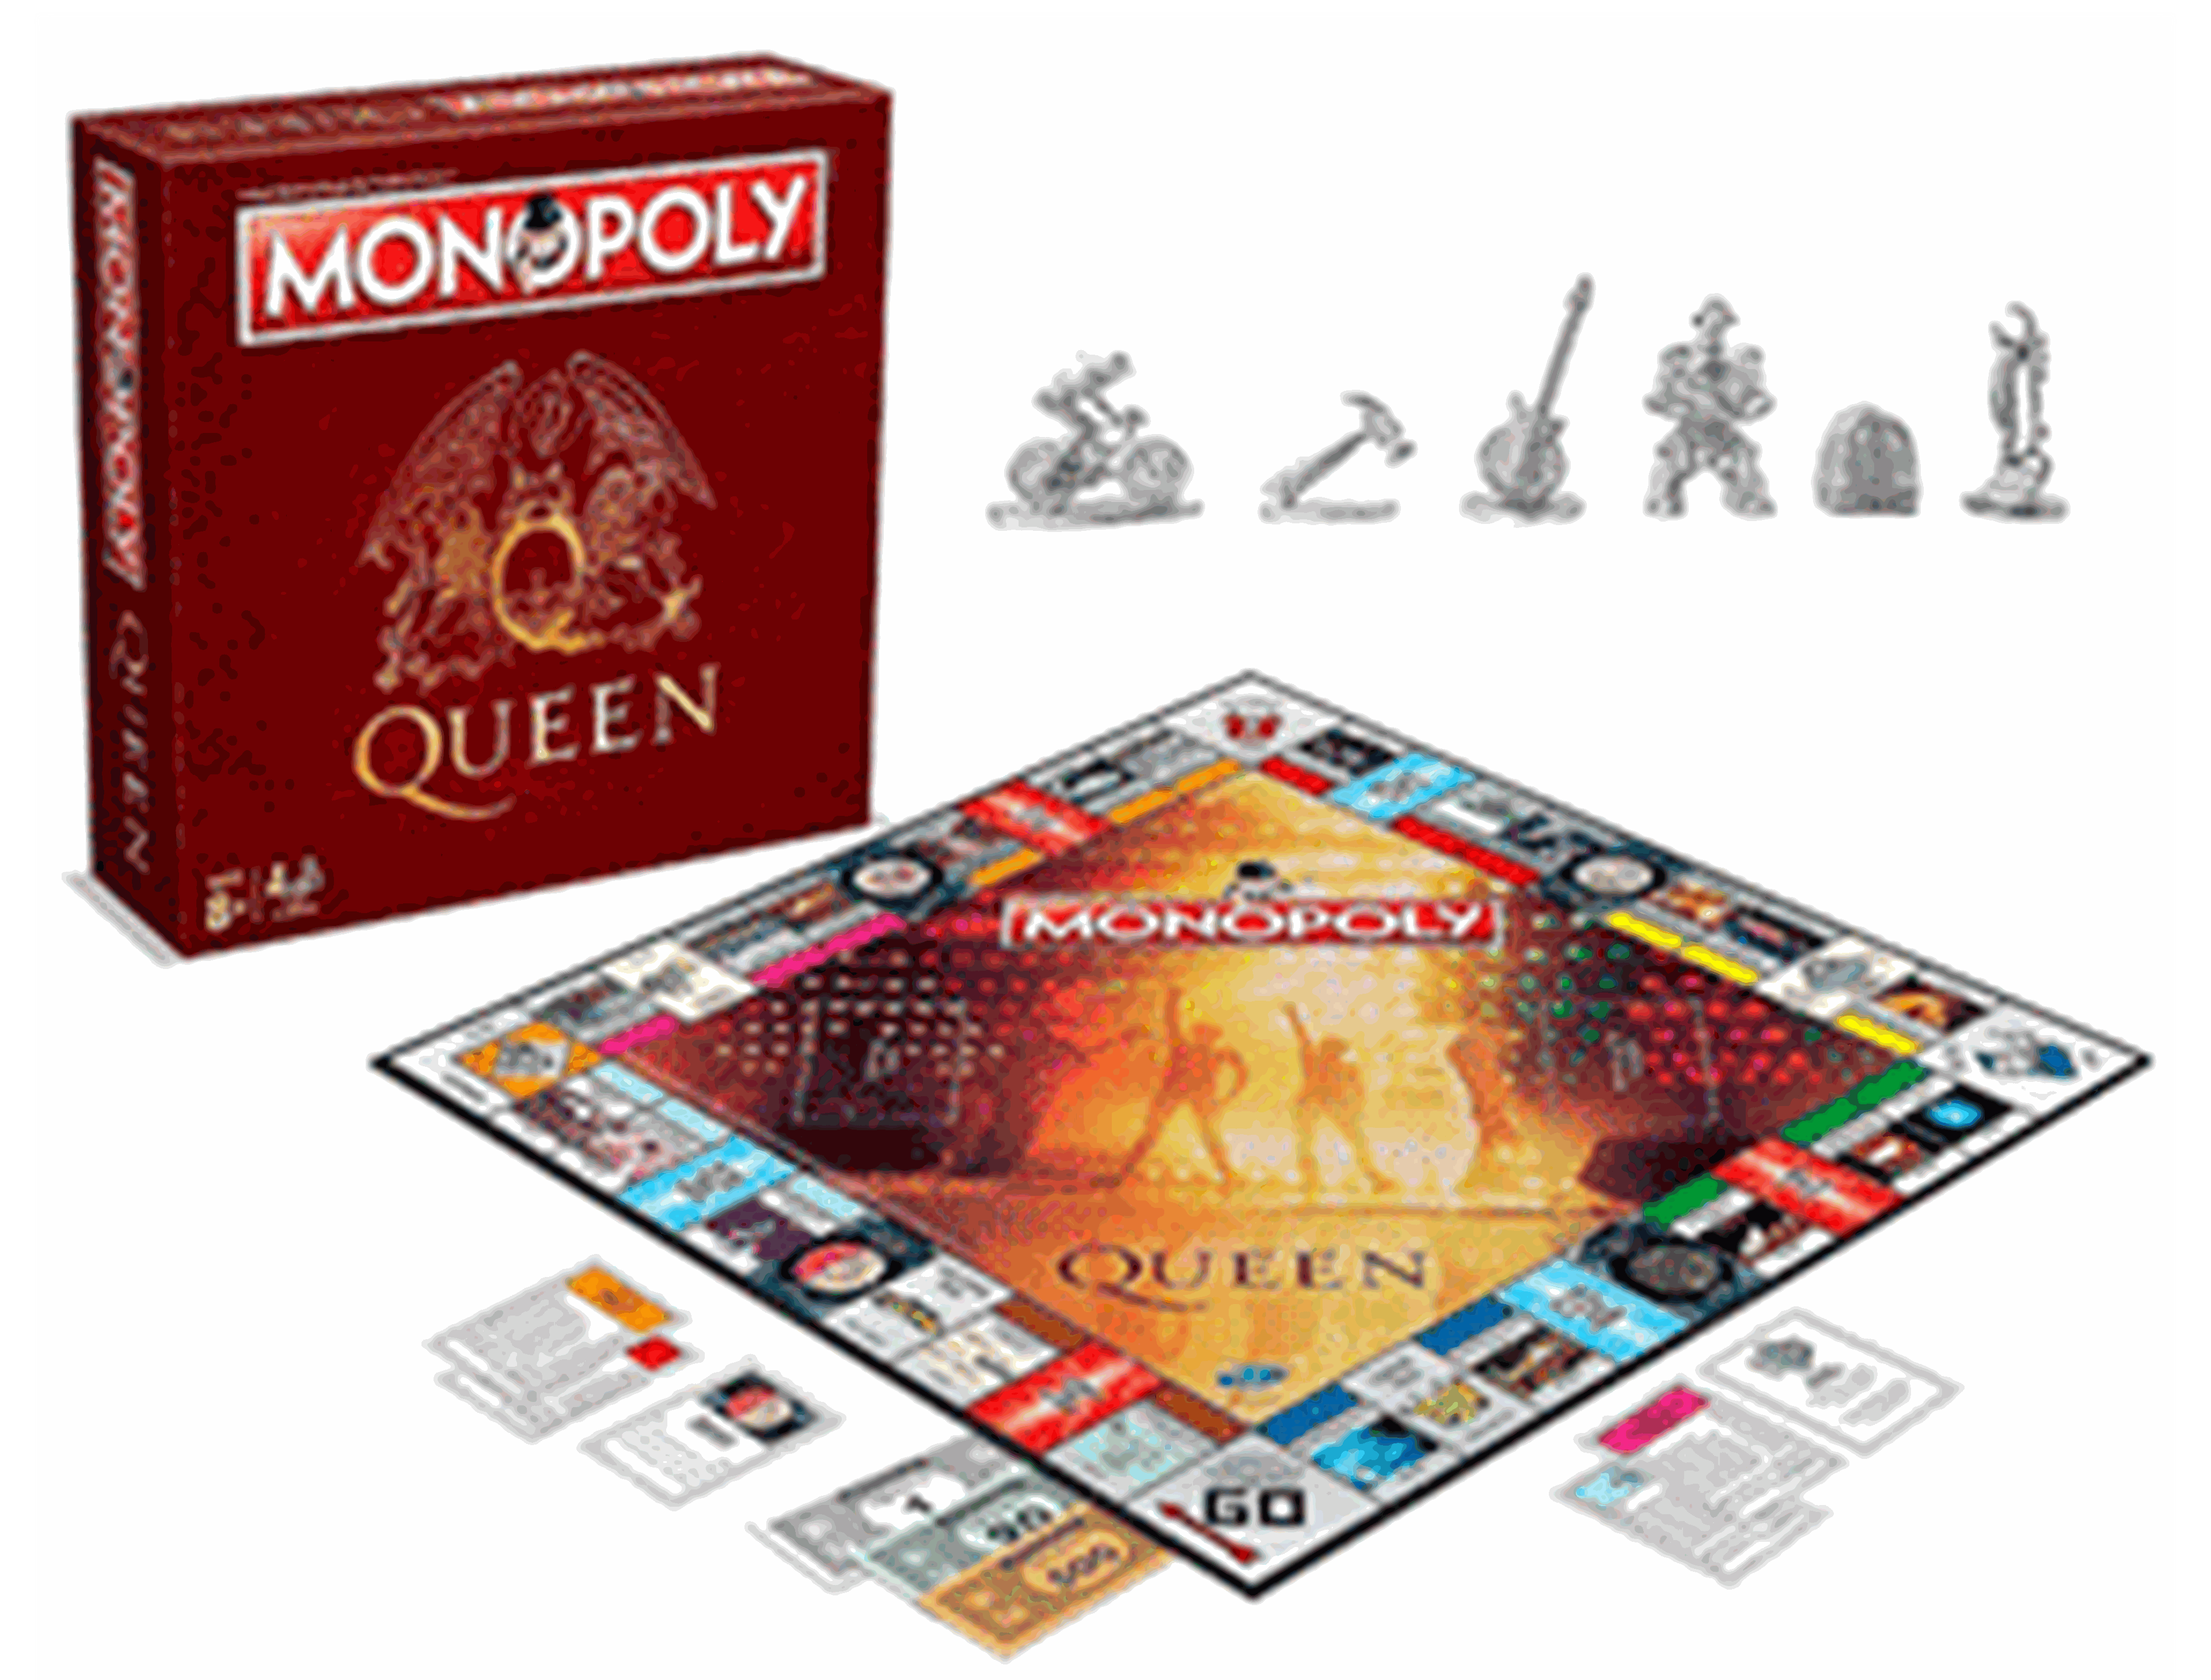 PROMO GAME JUEGOS DE MESA monopoly Queen